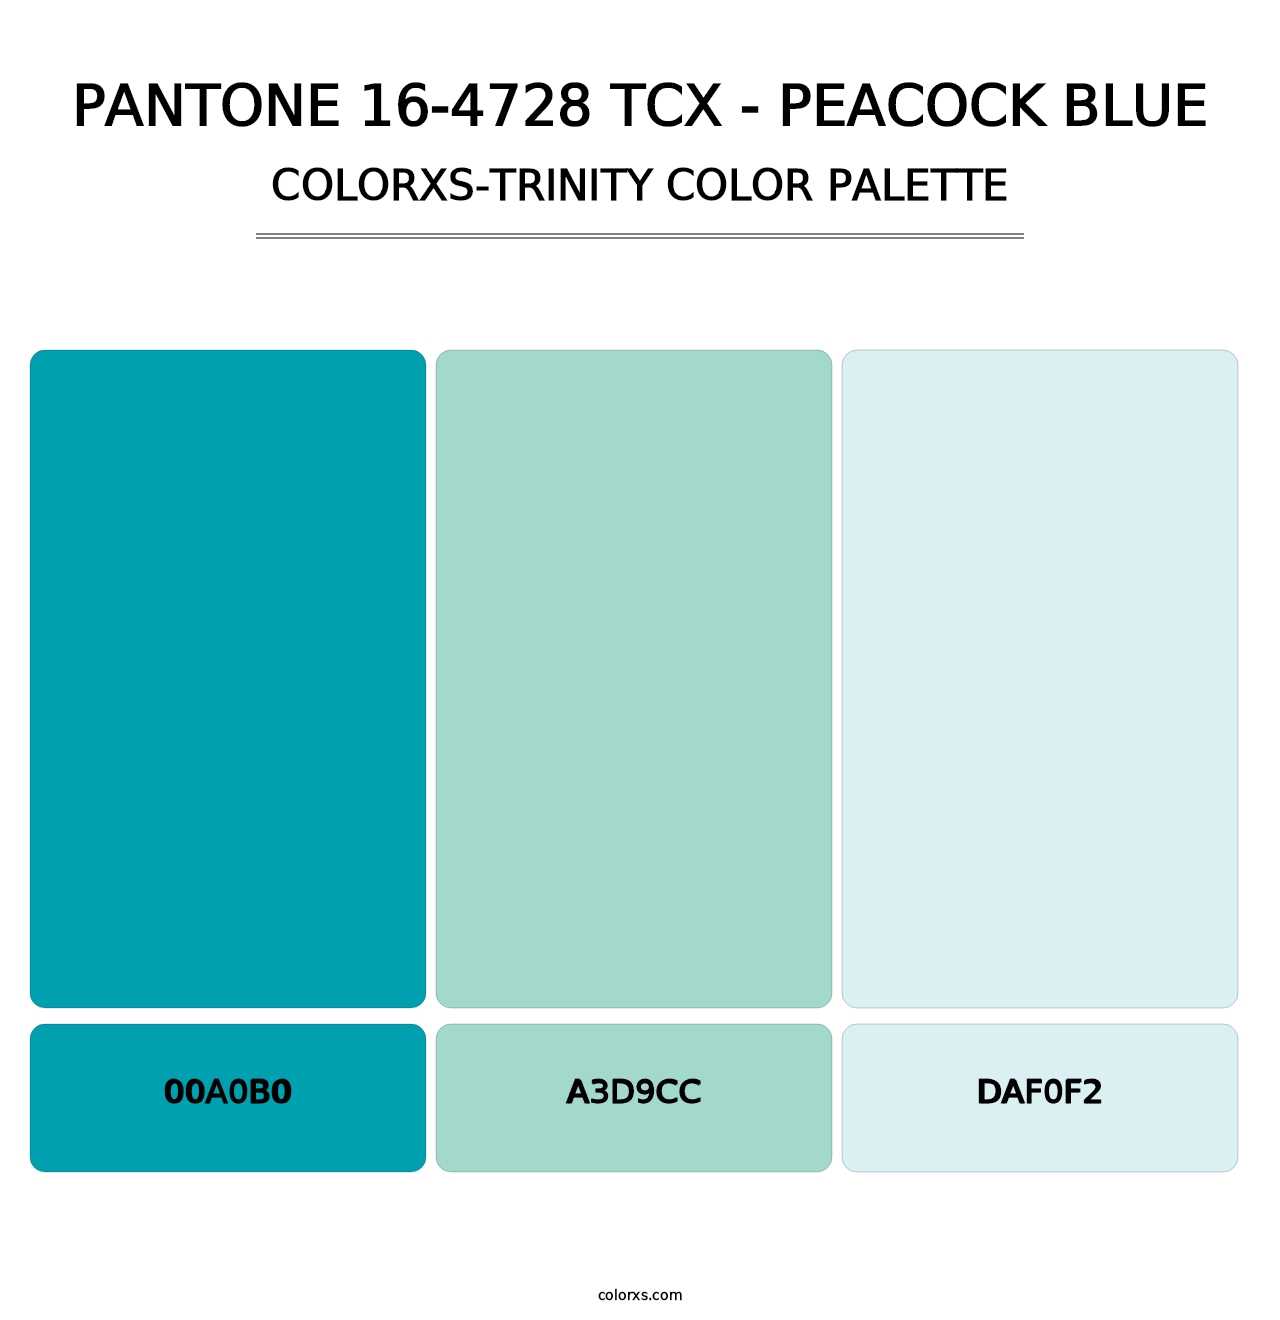 PANTONE 16-4728 TCX - Peacock Blue - Colorxs Trinity Palette